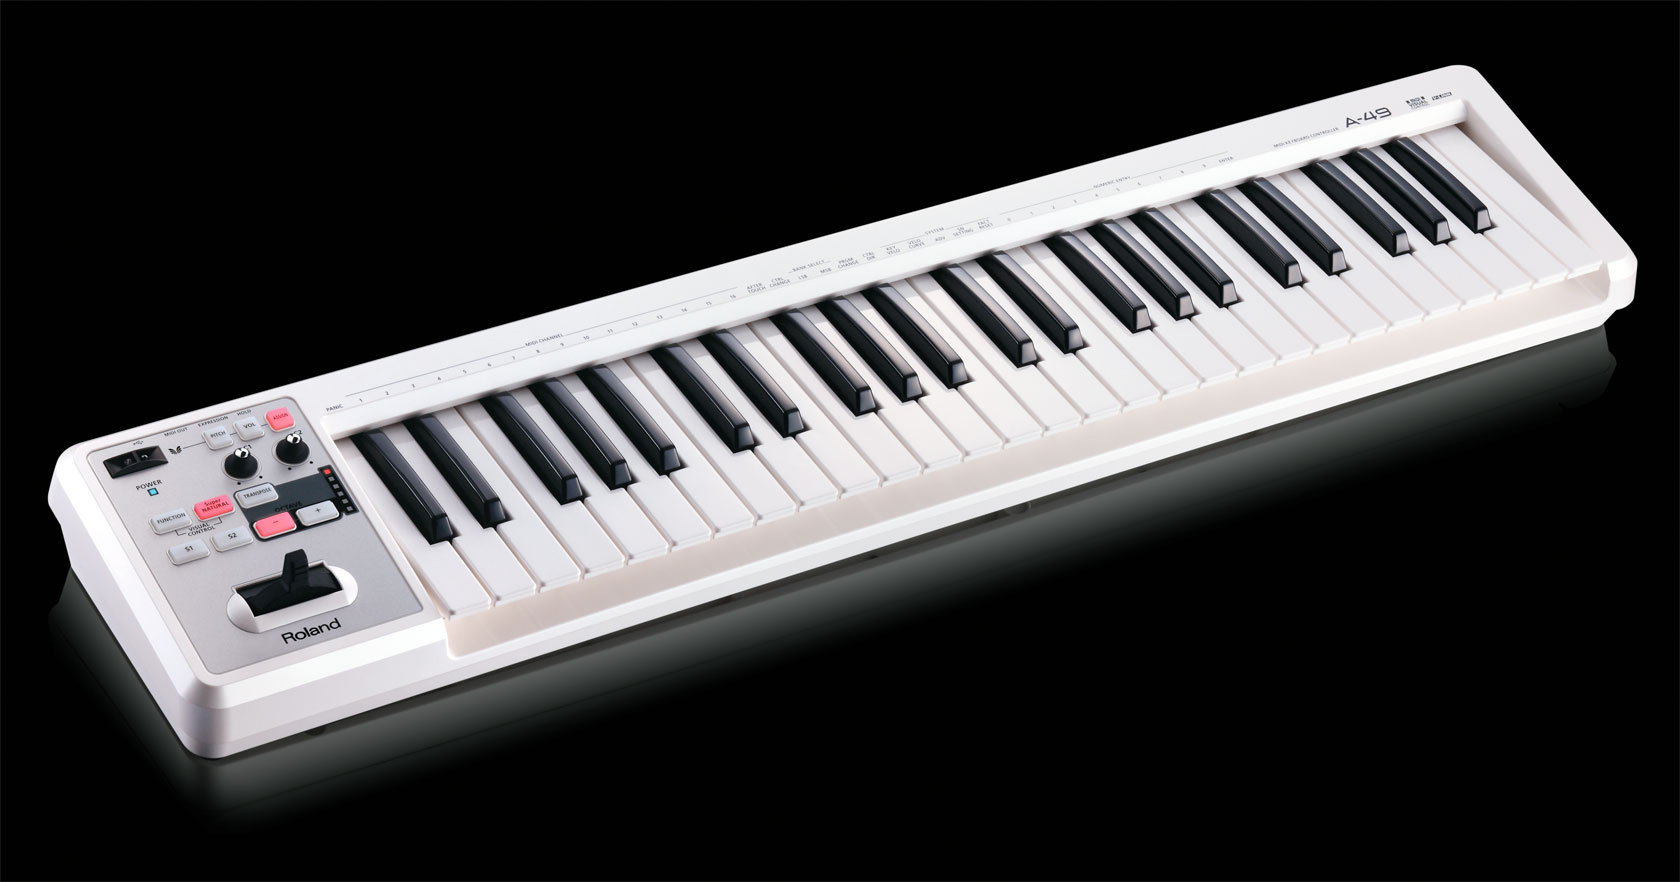 Roland - A-49 | MIDI Keyboard Controller